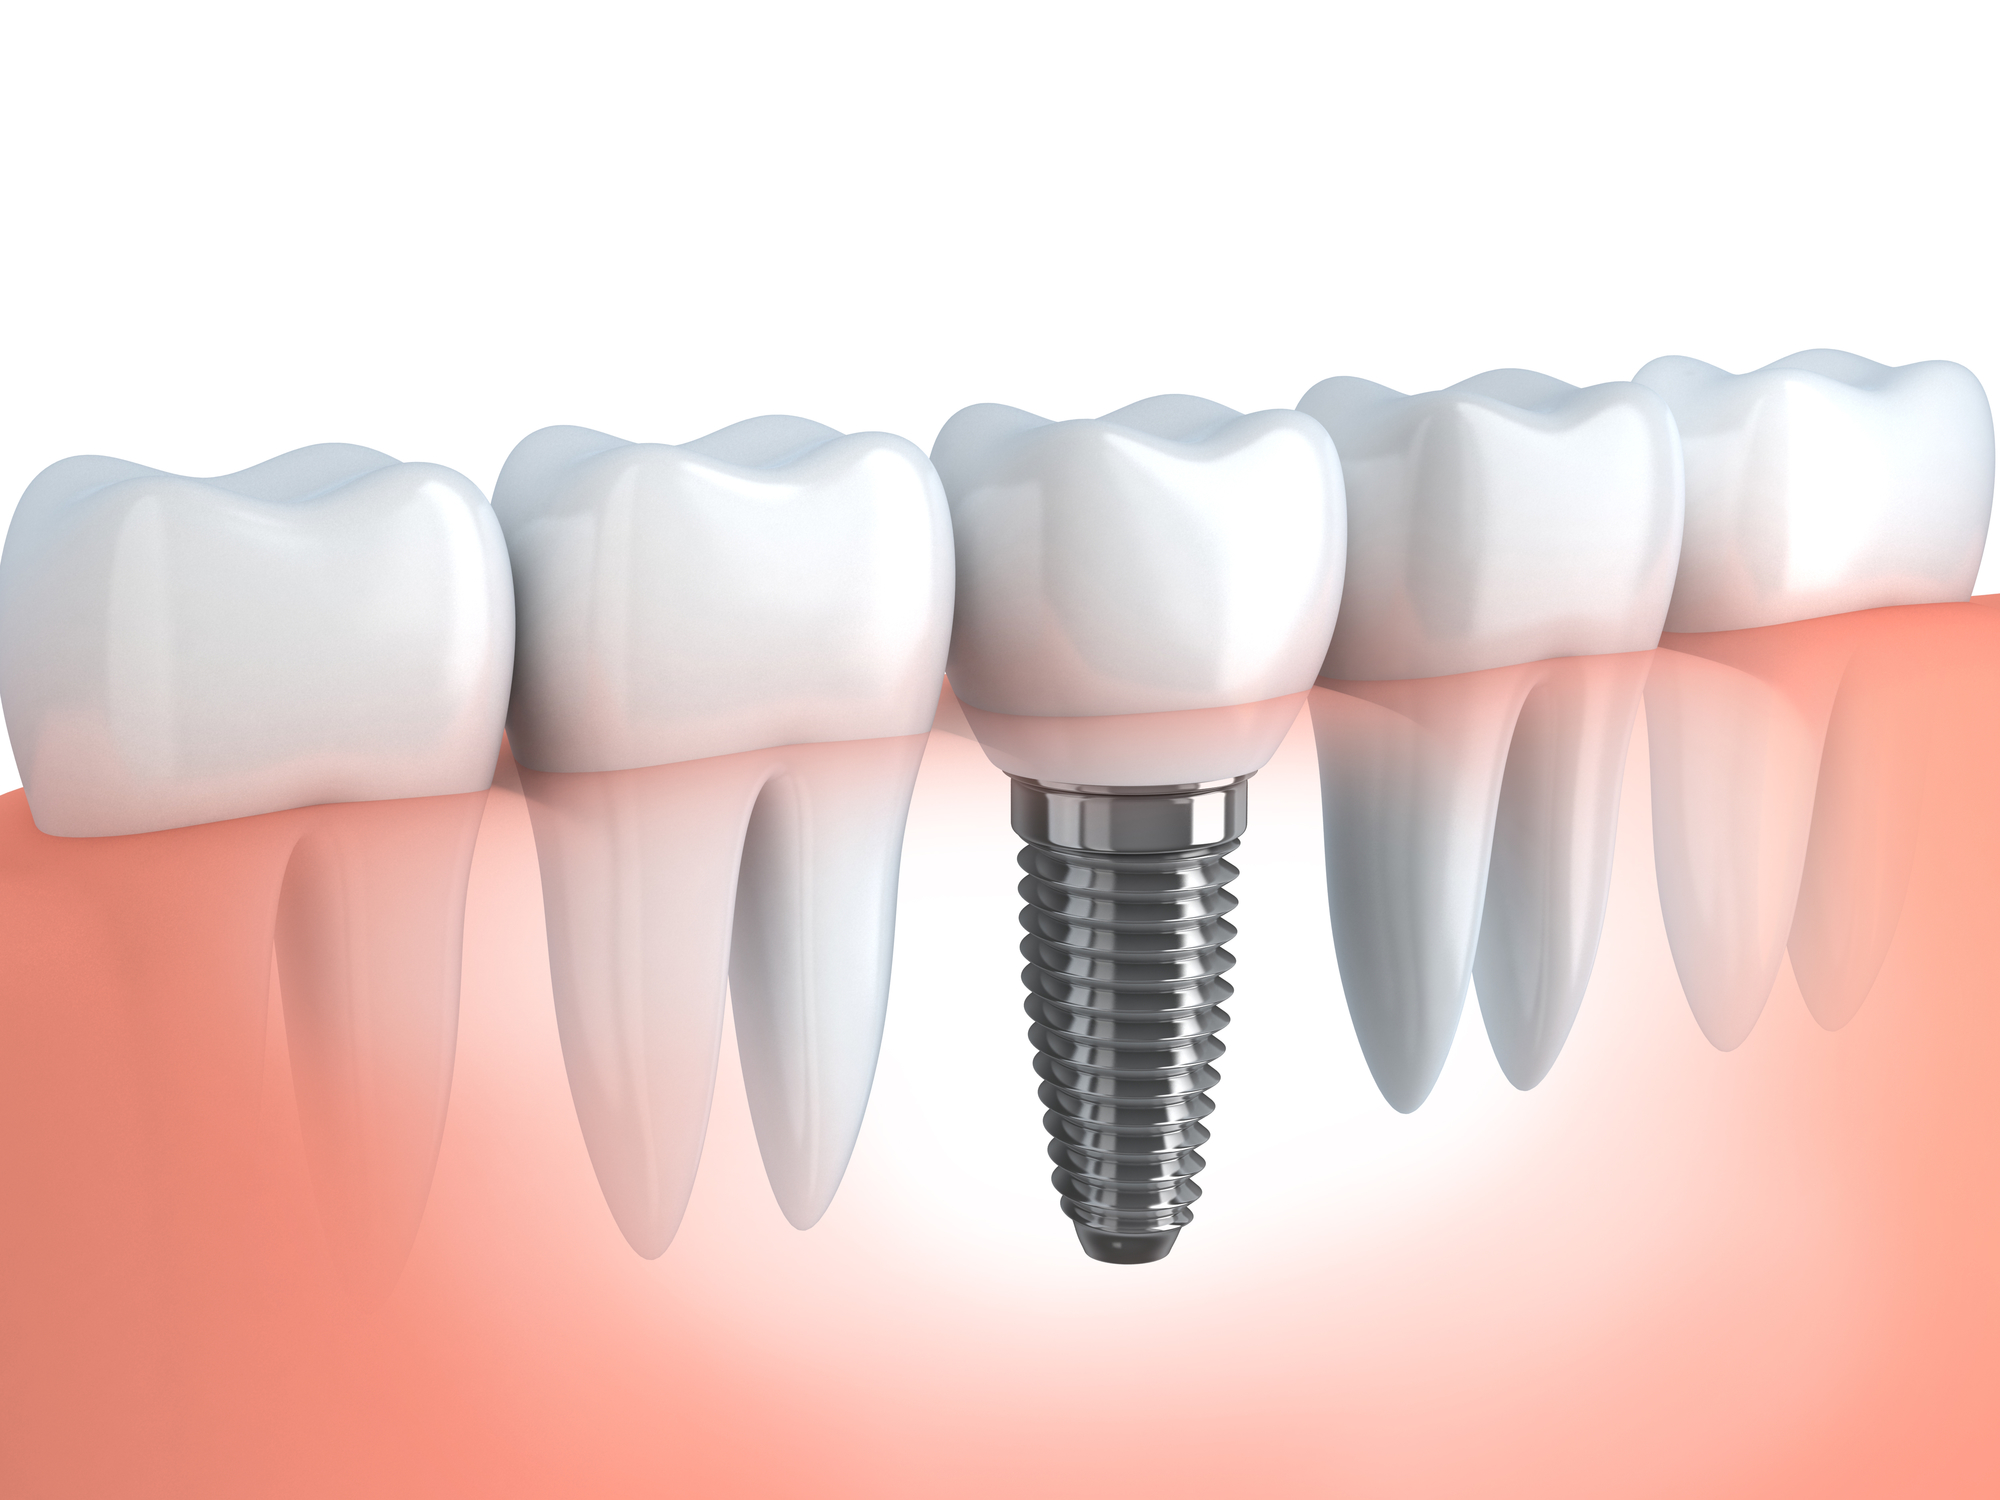 Dental implant image